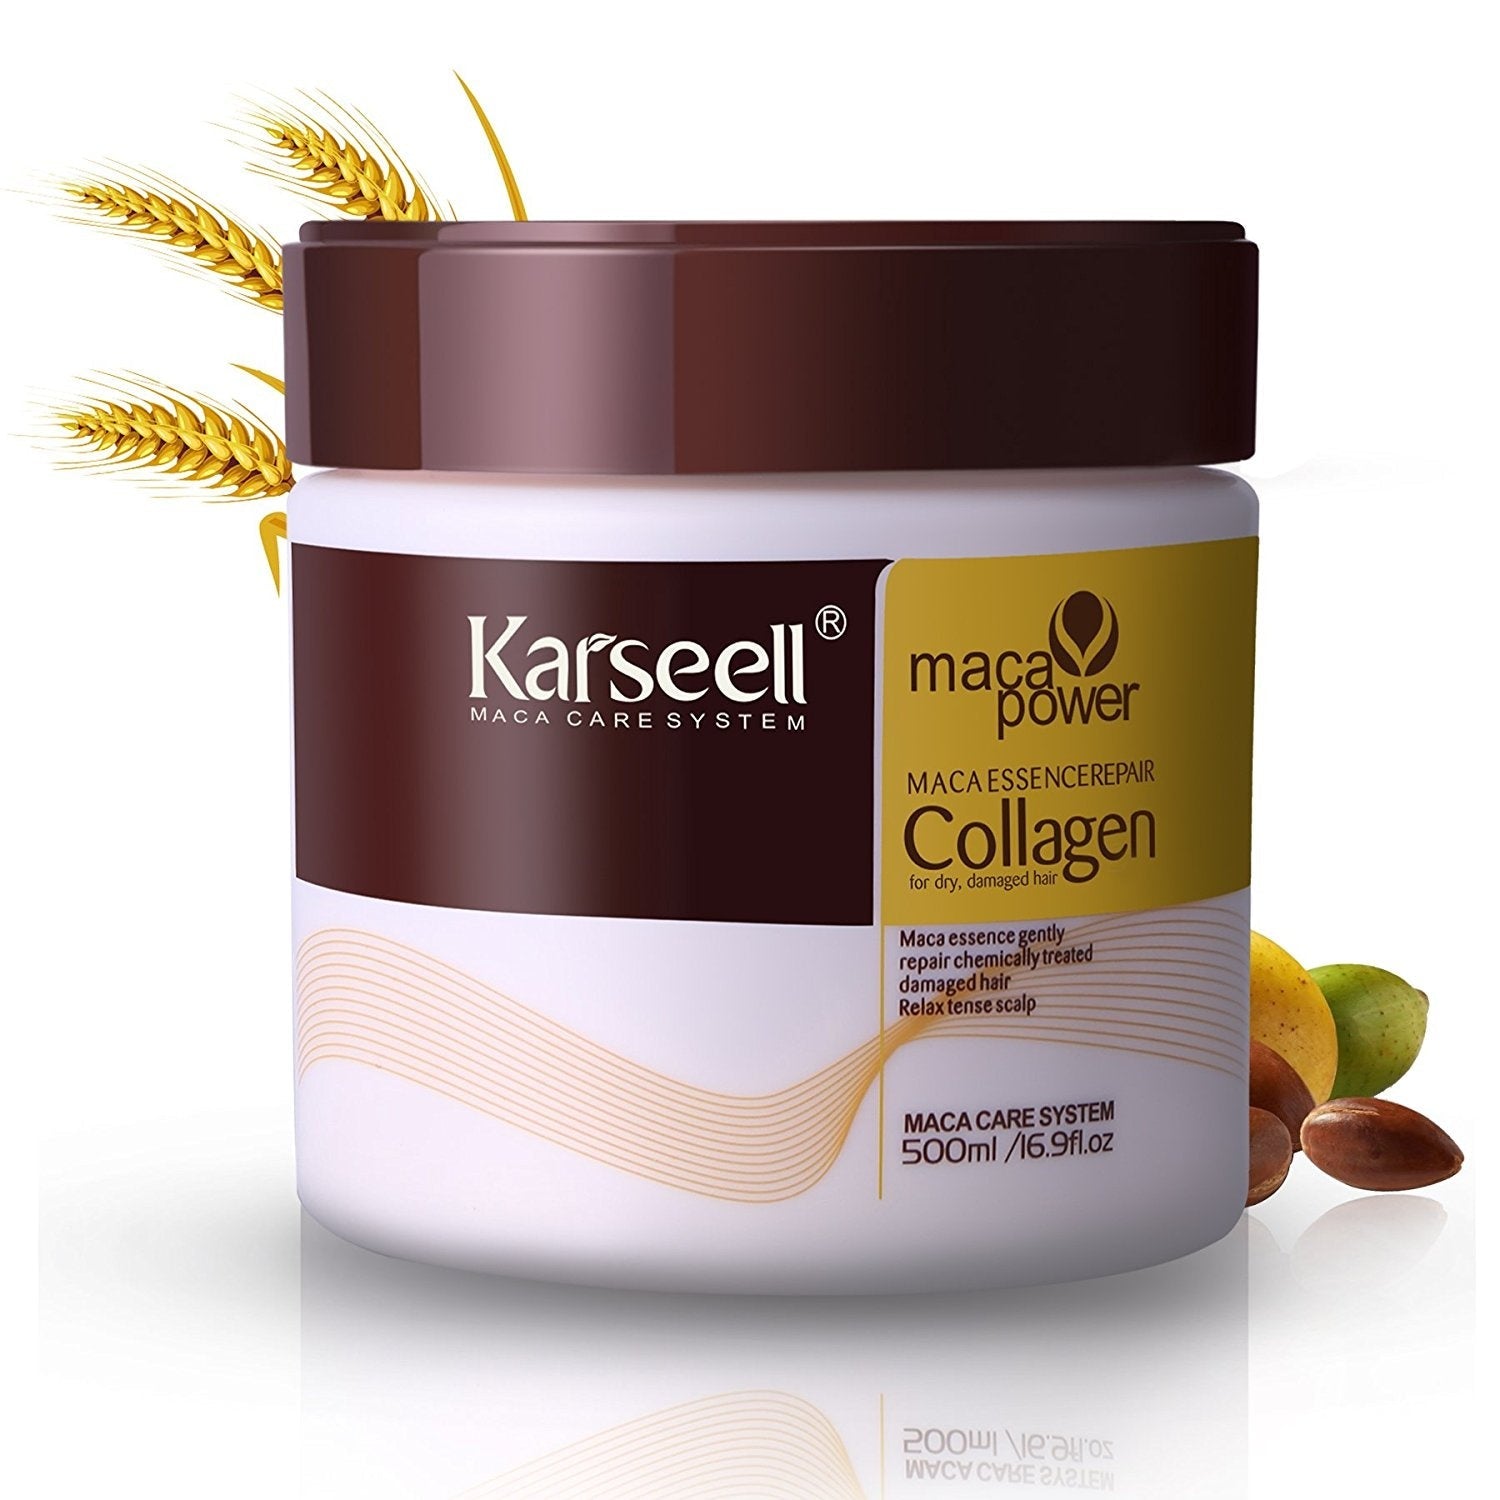 Máscara Karseell® Collagen Original 500ml [COMPRE 1, LEVE 2]